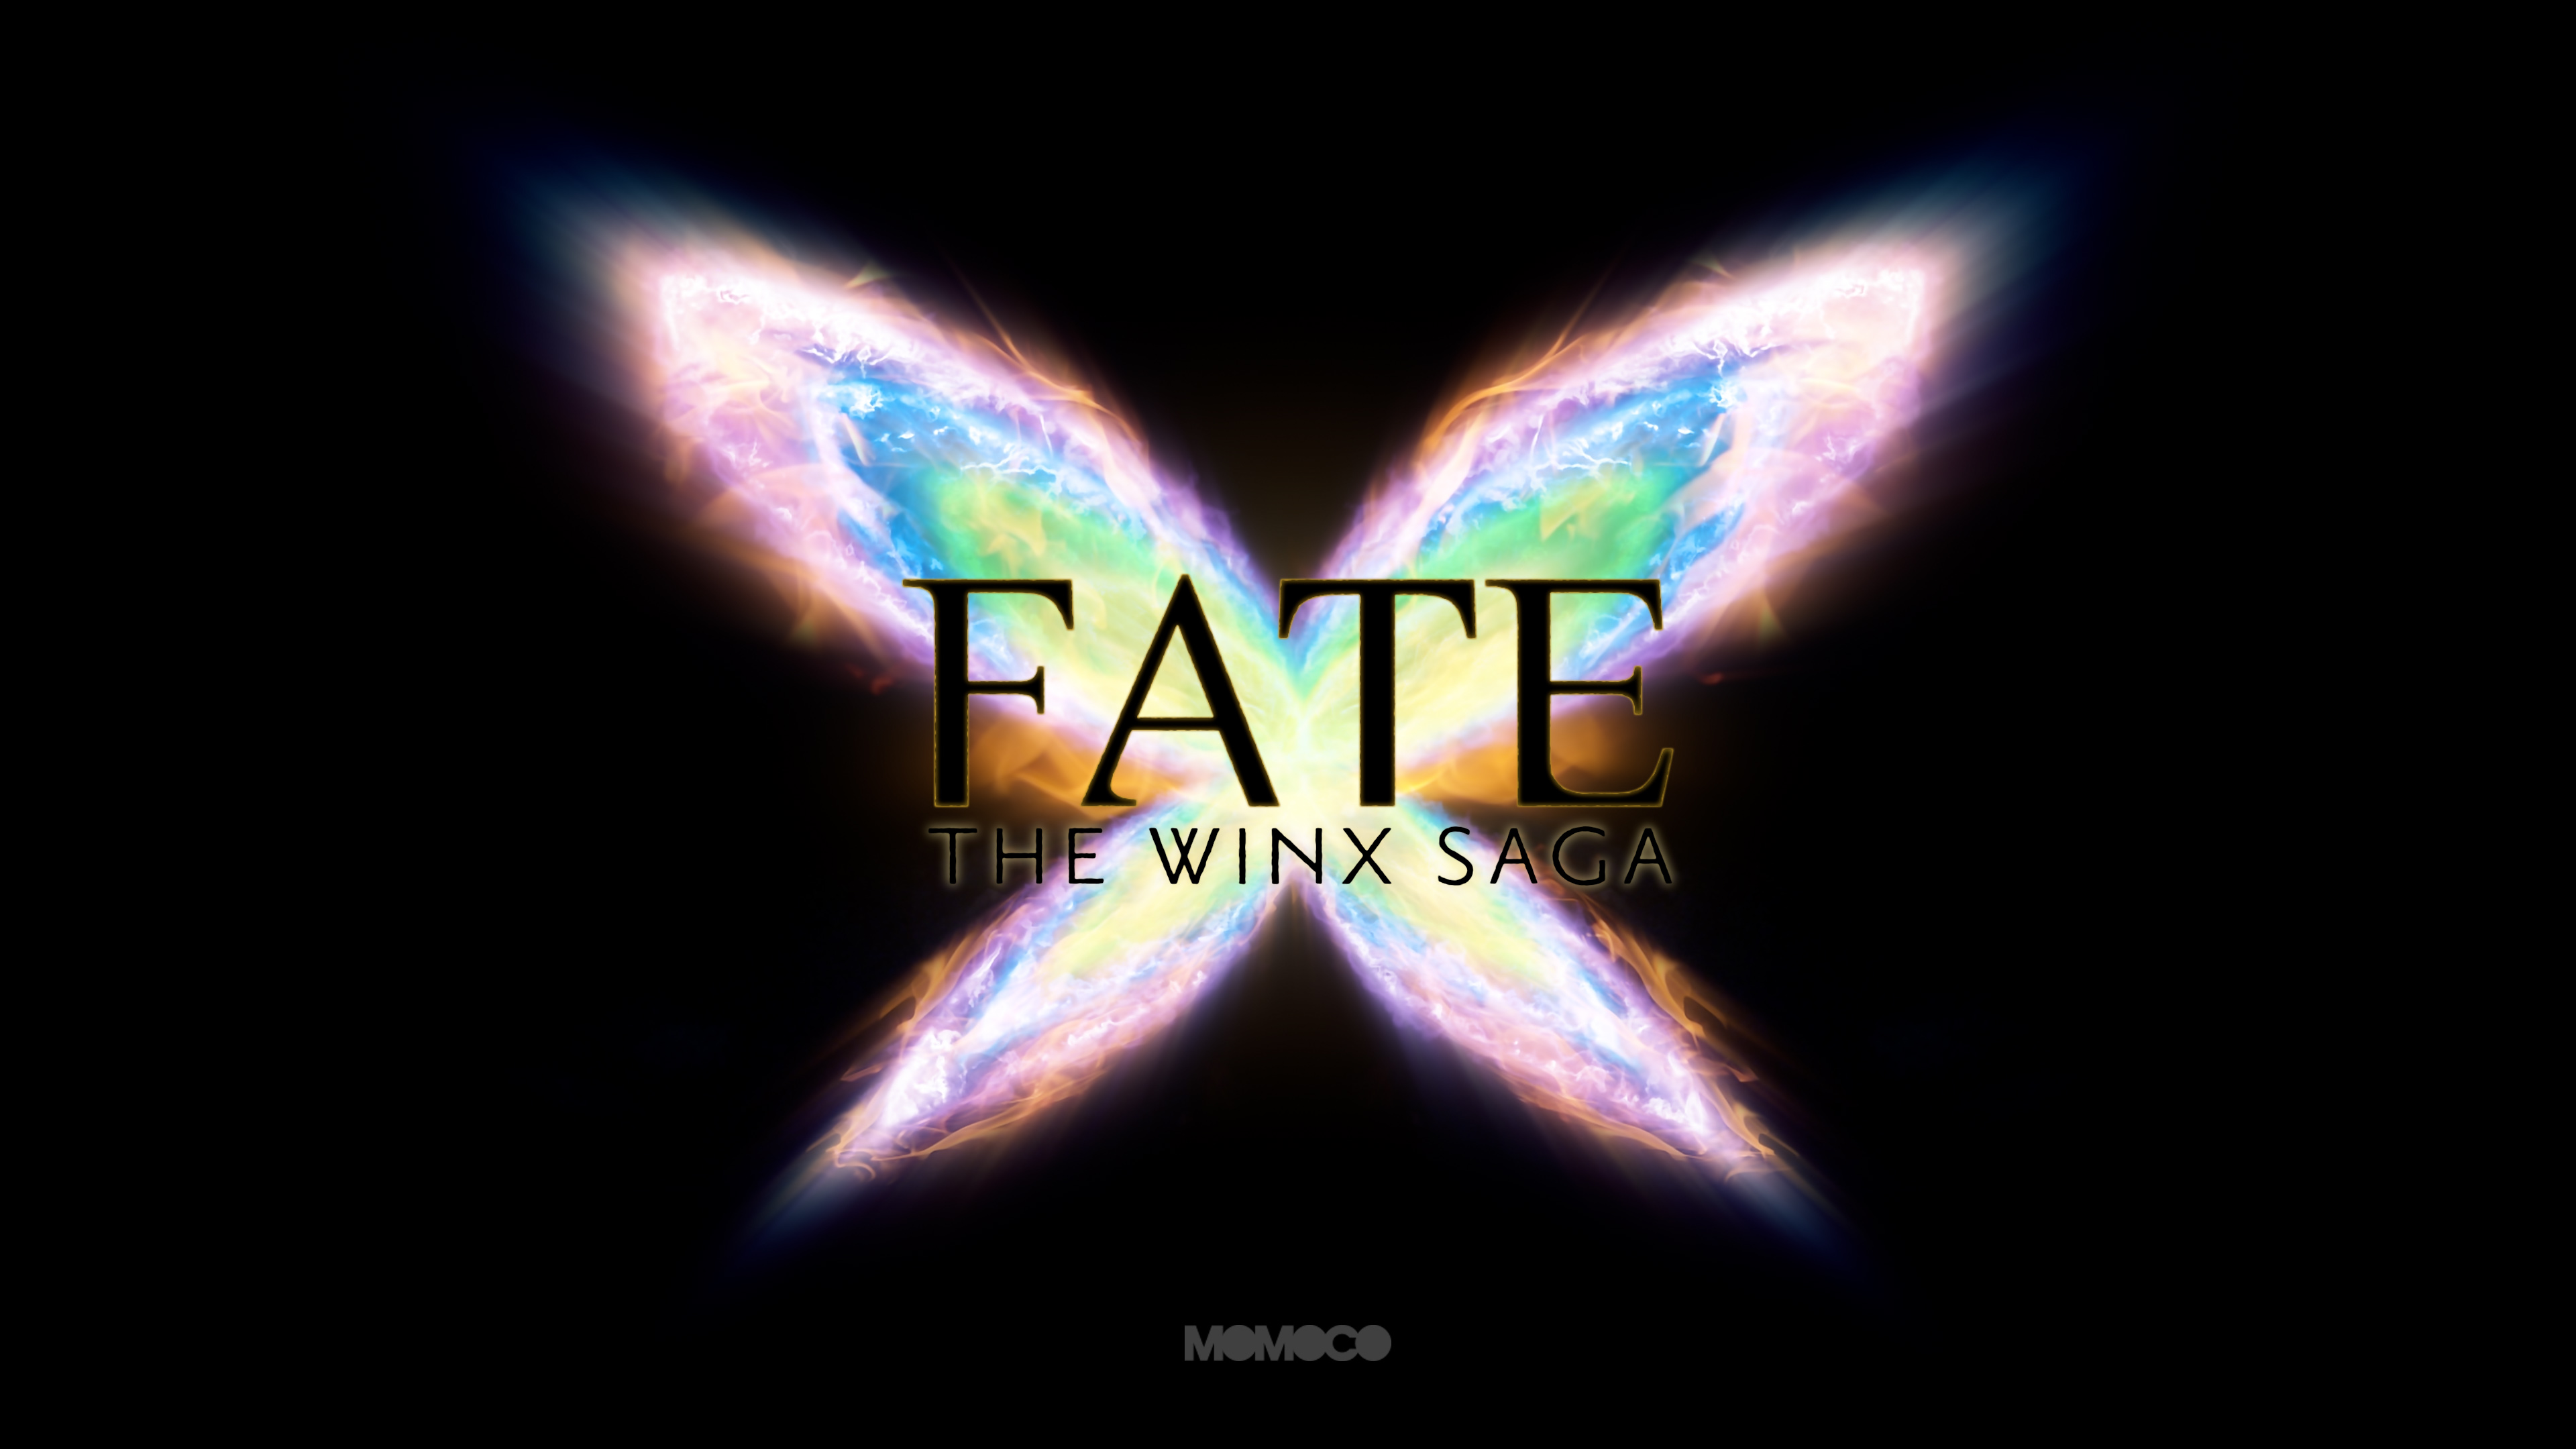 Fate: The Winx Saga Wallpapers